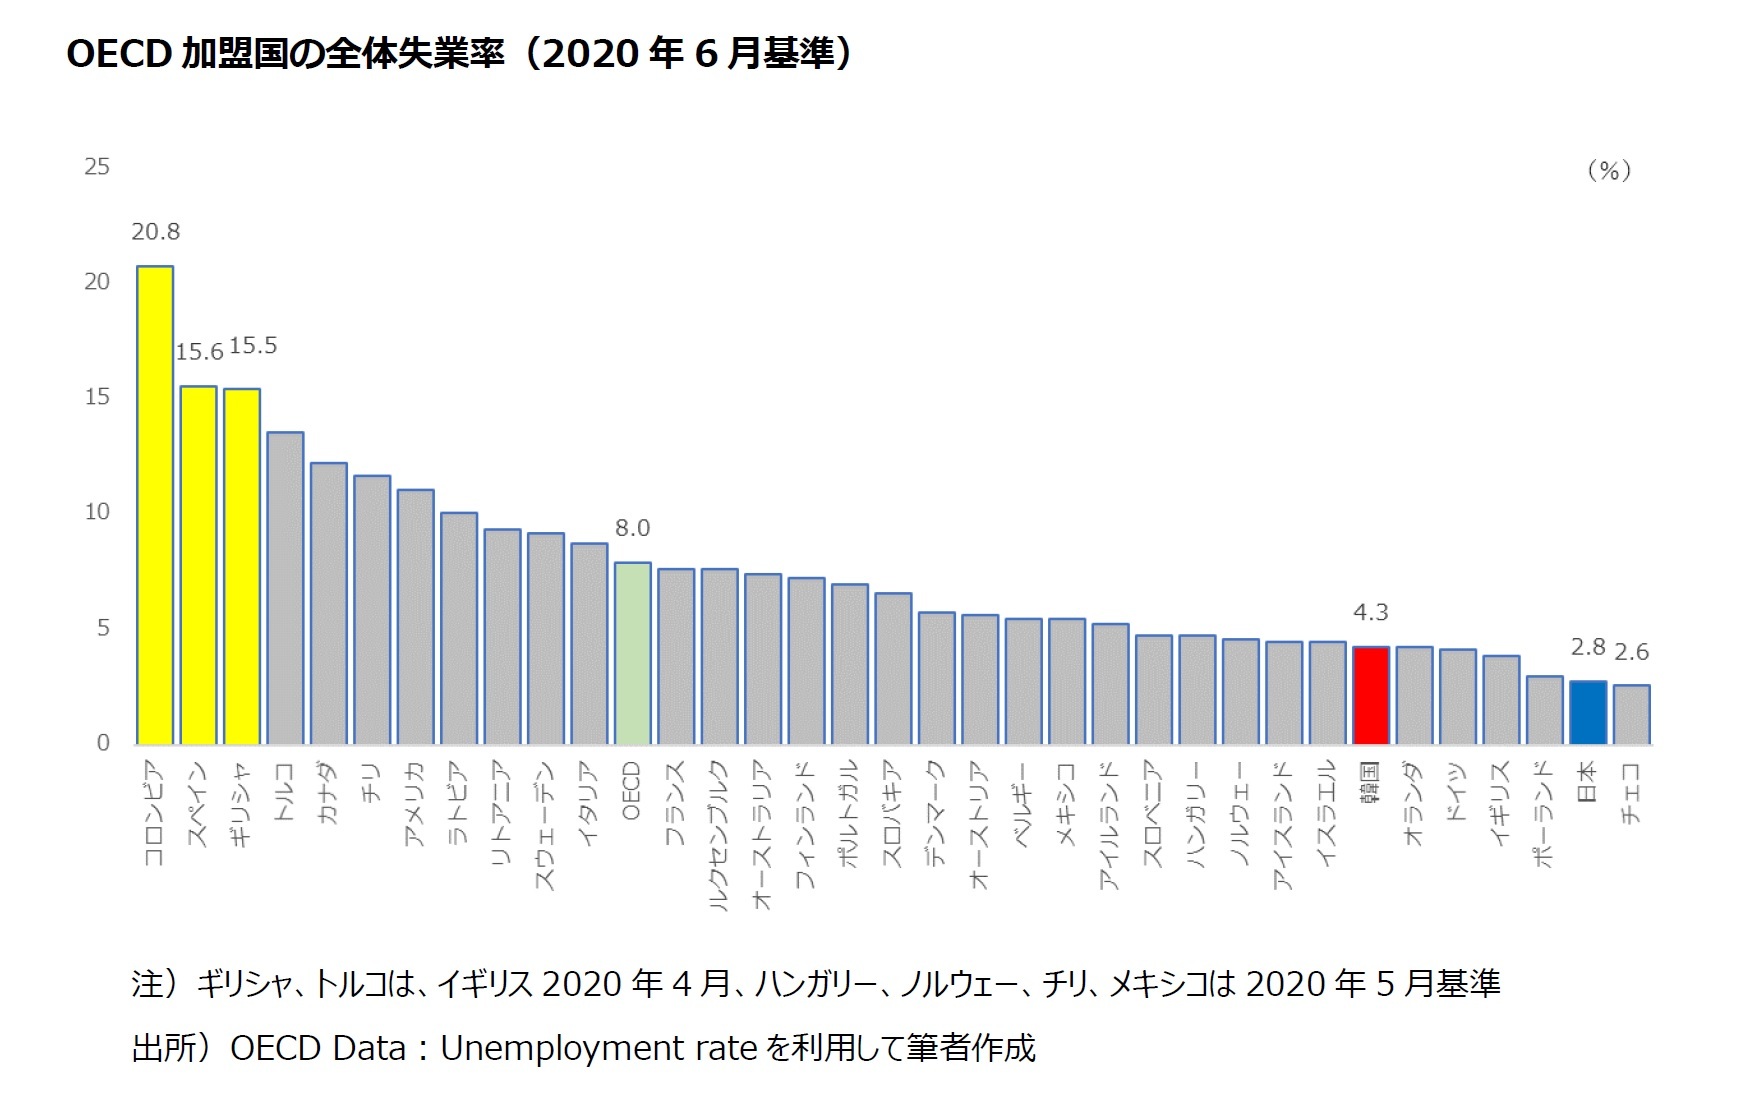 OECD 加盟国の全体失業率（2020 年6 月基準）